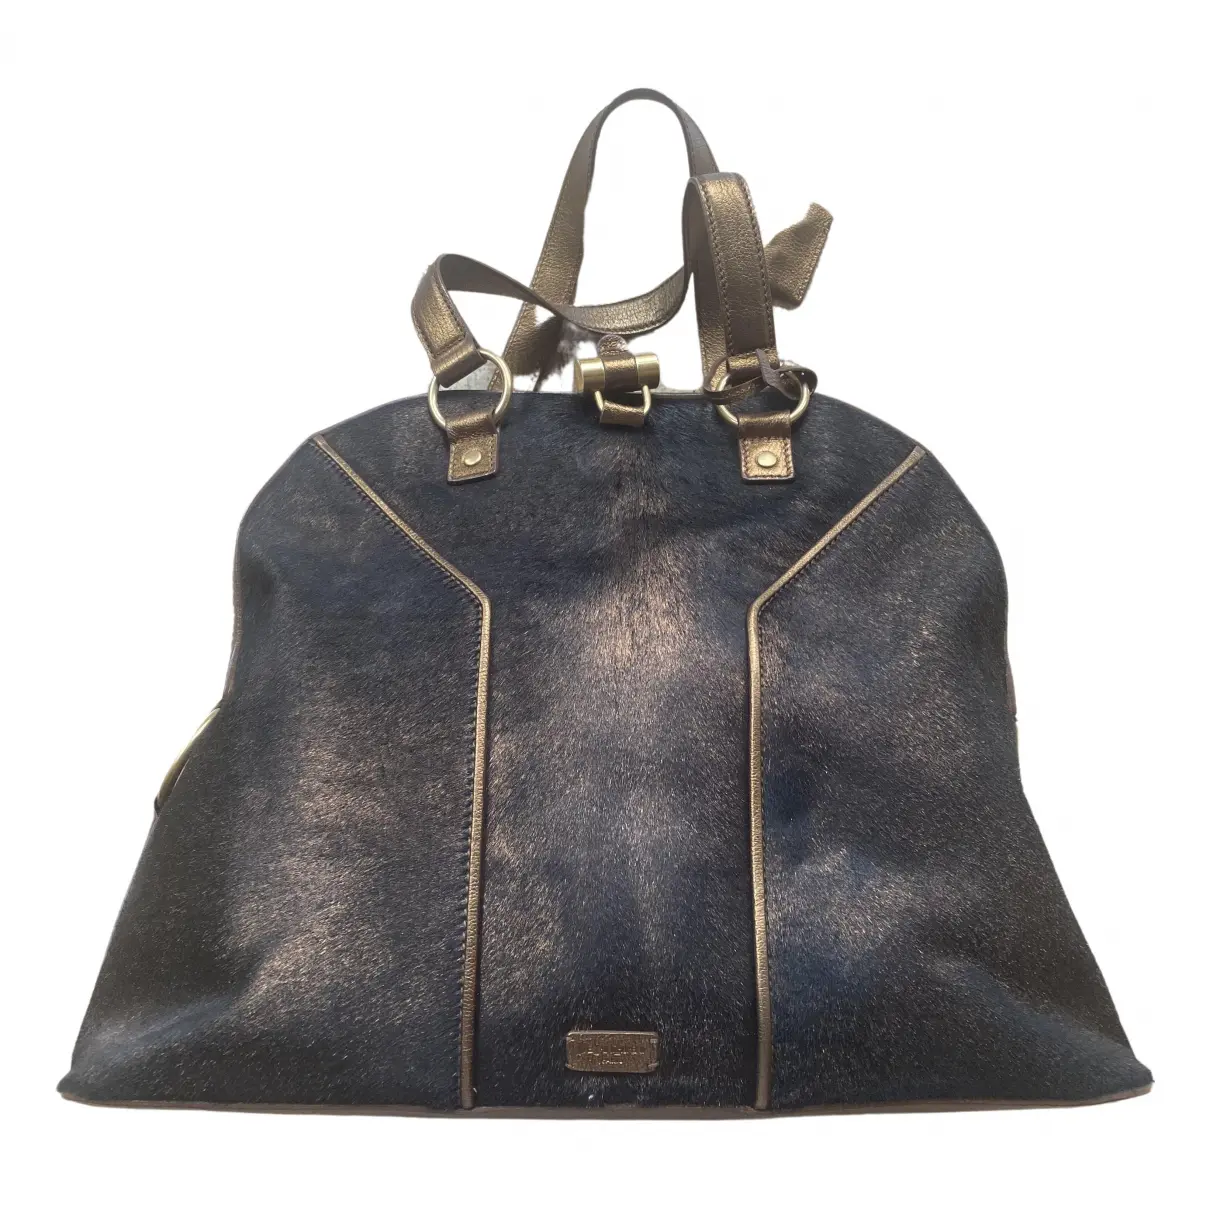 Easy leather handbag Yves Saint Laurent